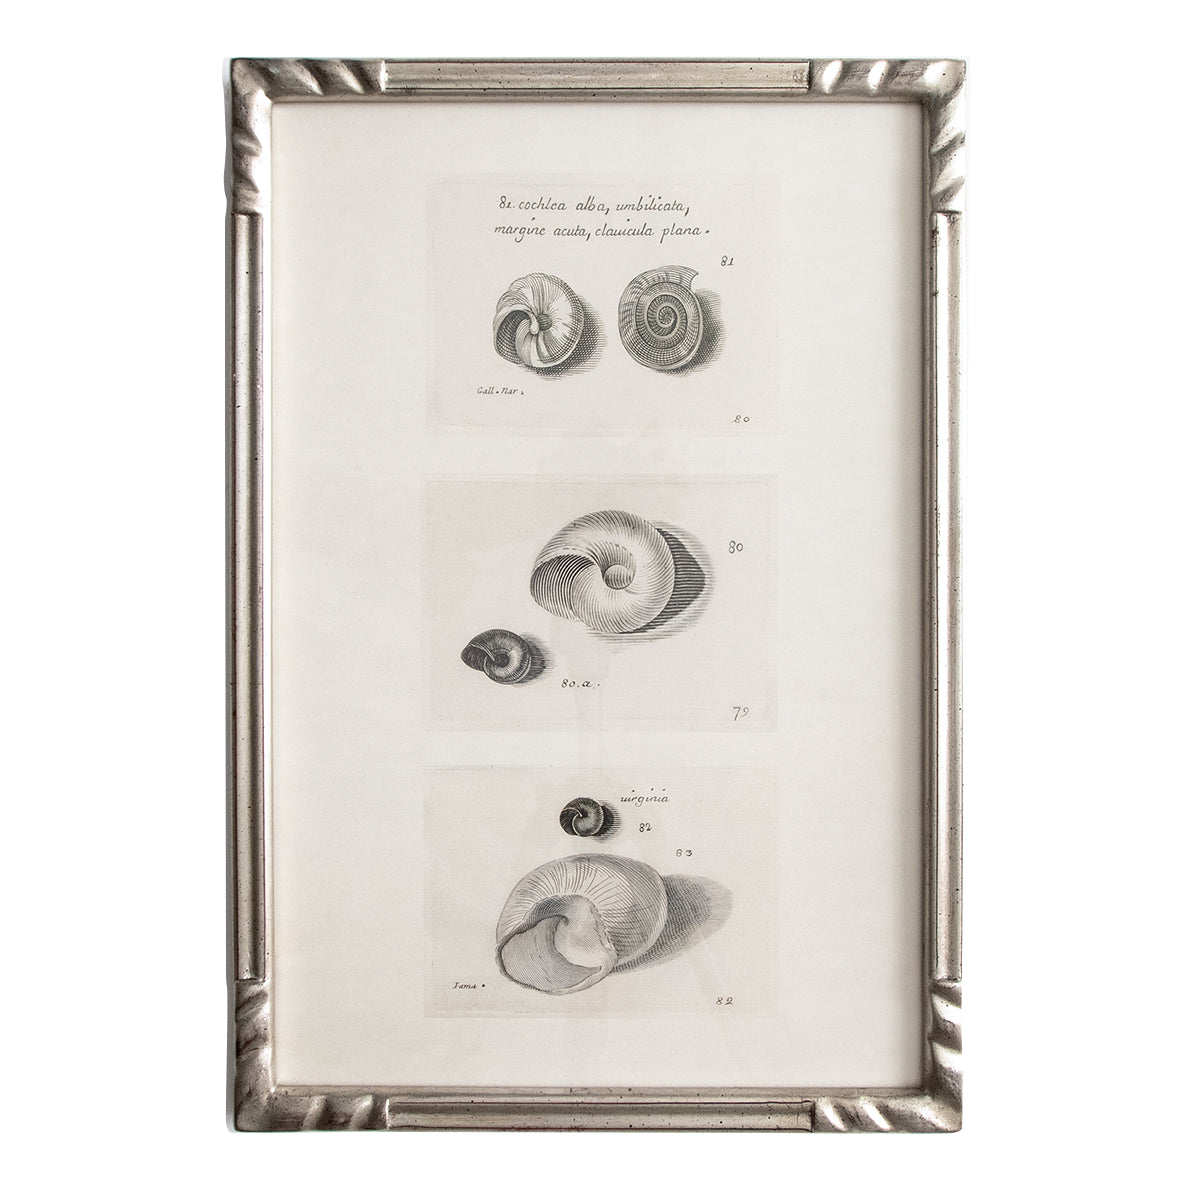 33×48.5cm フレーム Antique Silver Study of Shells